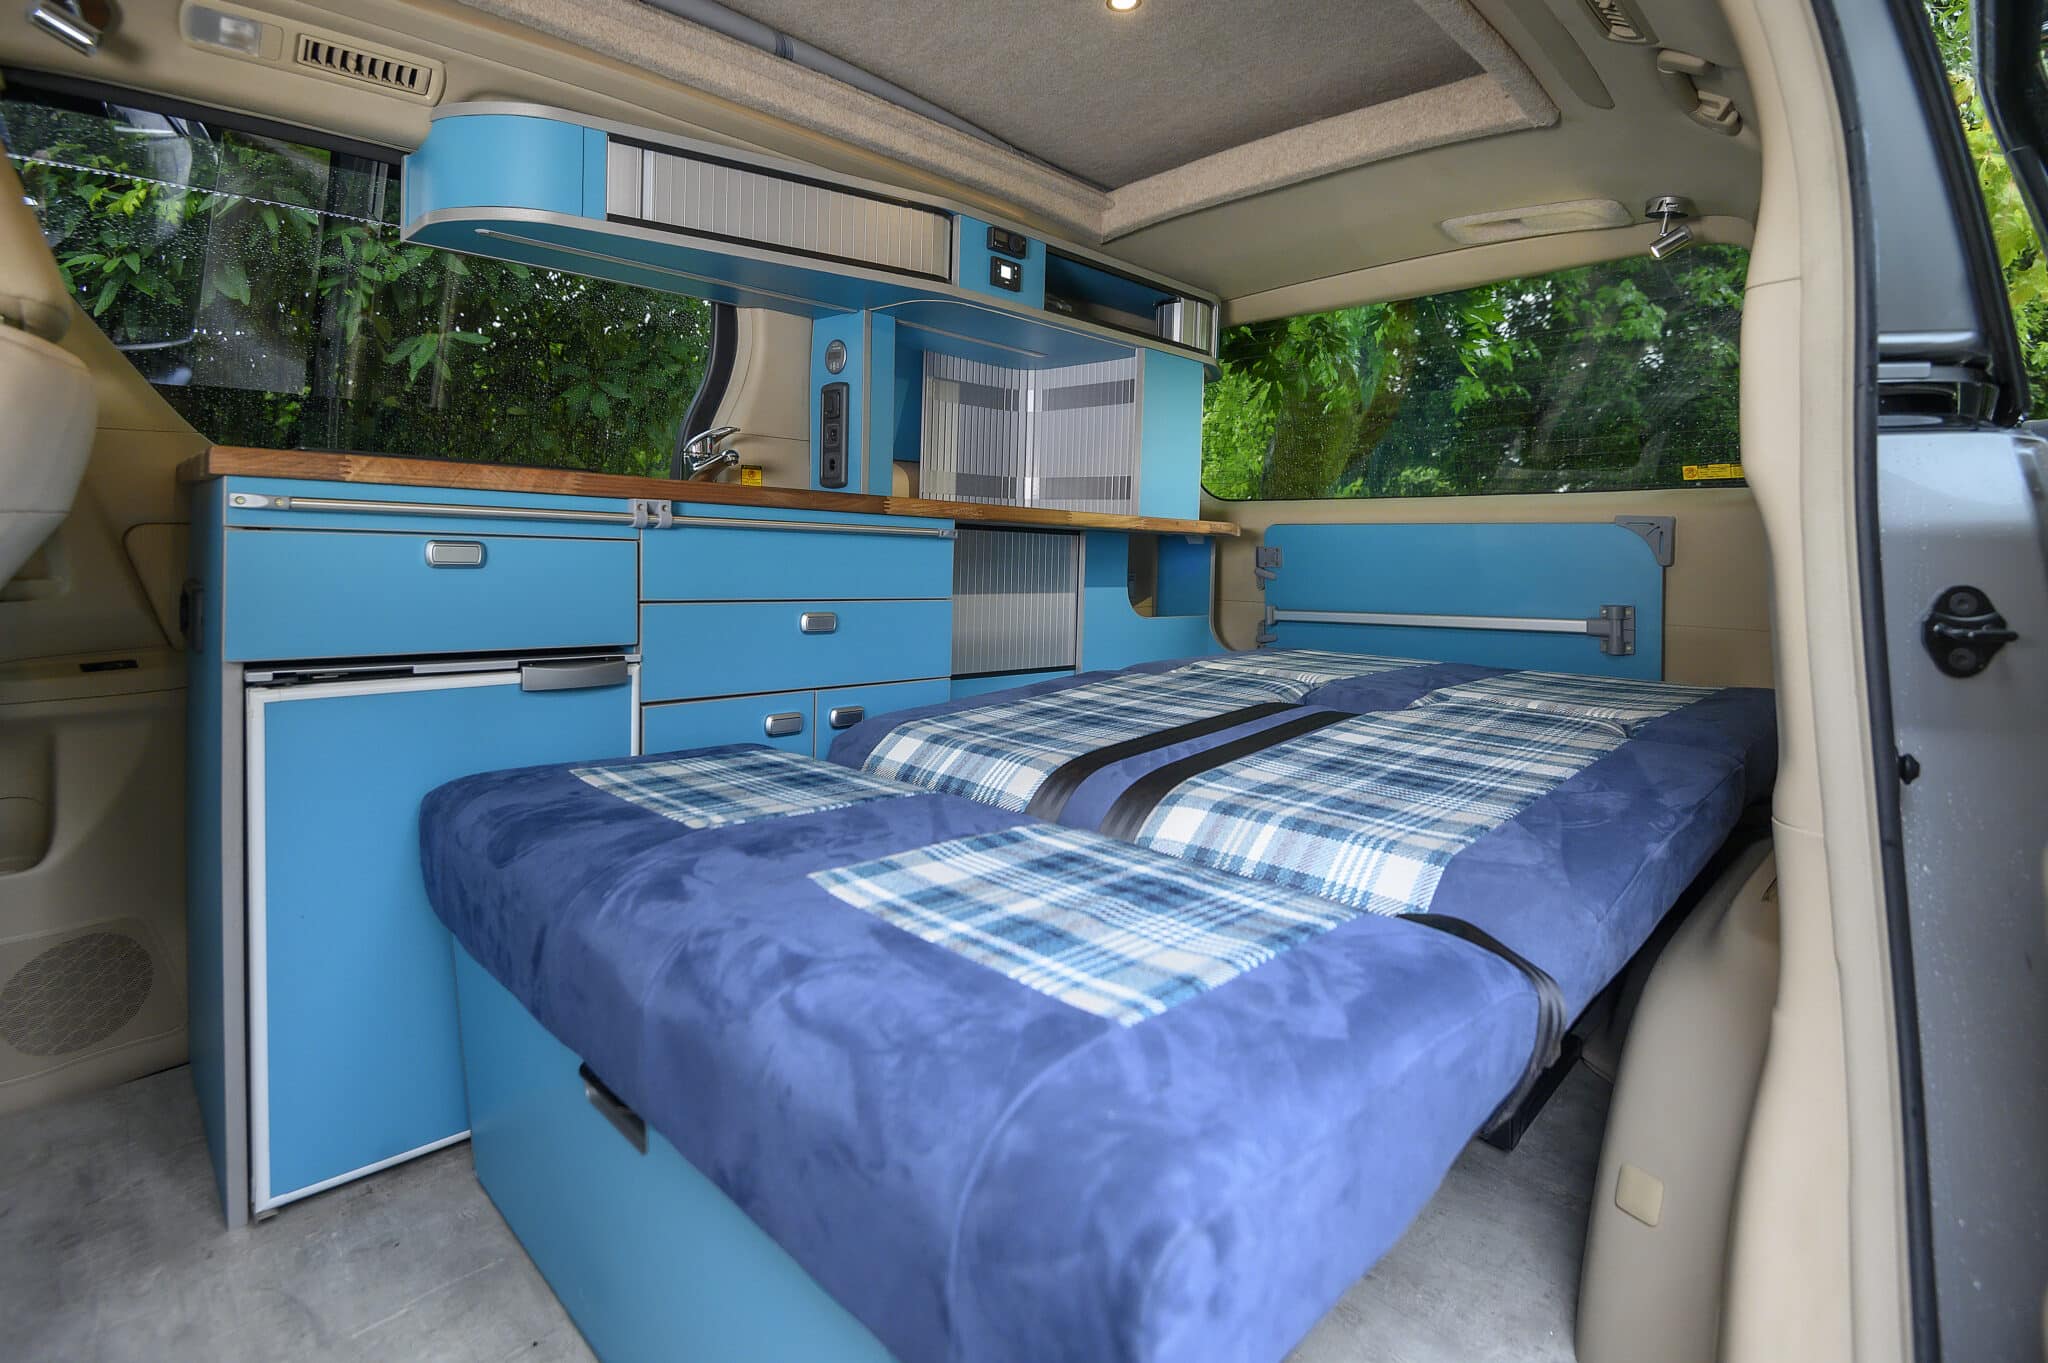 What’s inside a campervan?